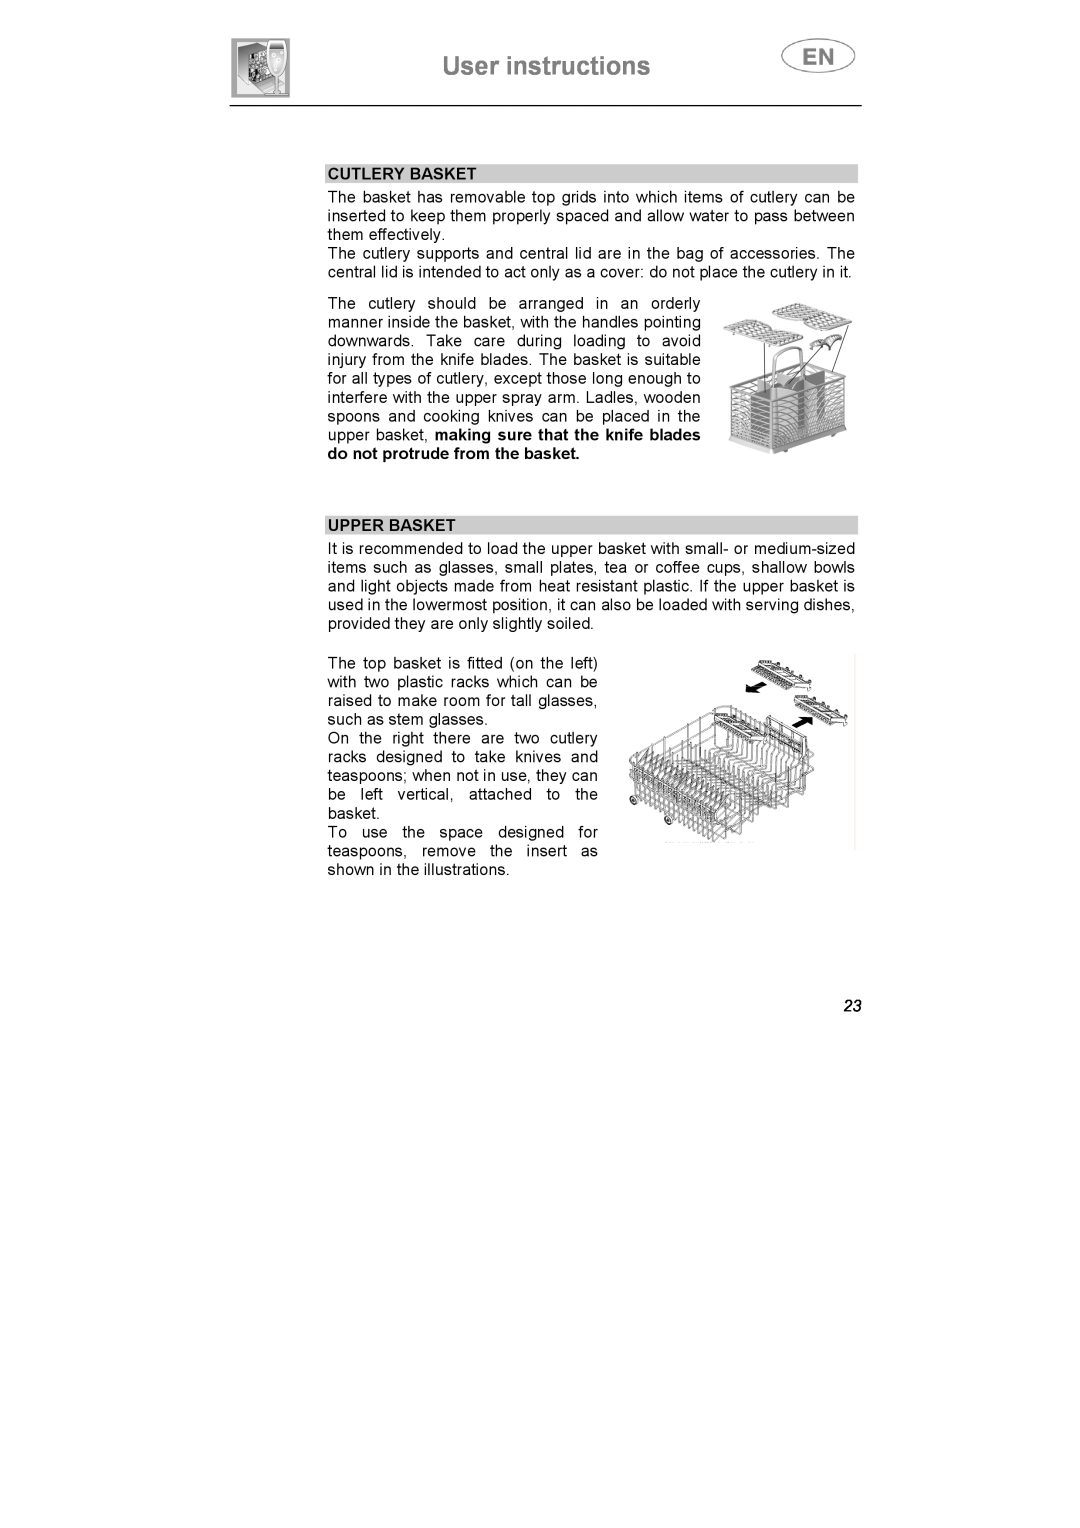 Smeg CA01-5, CA01-4, CA01S manual User instructions, Cutlery Basket, Upper Basket 